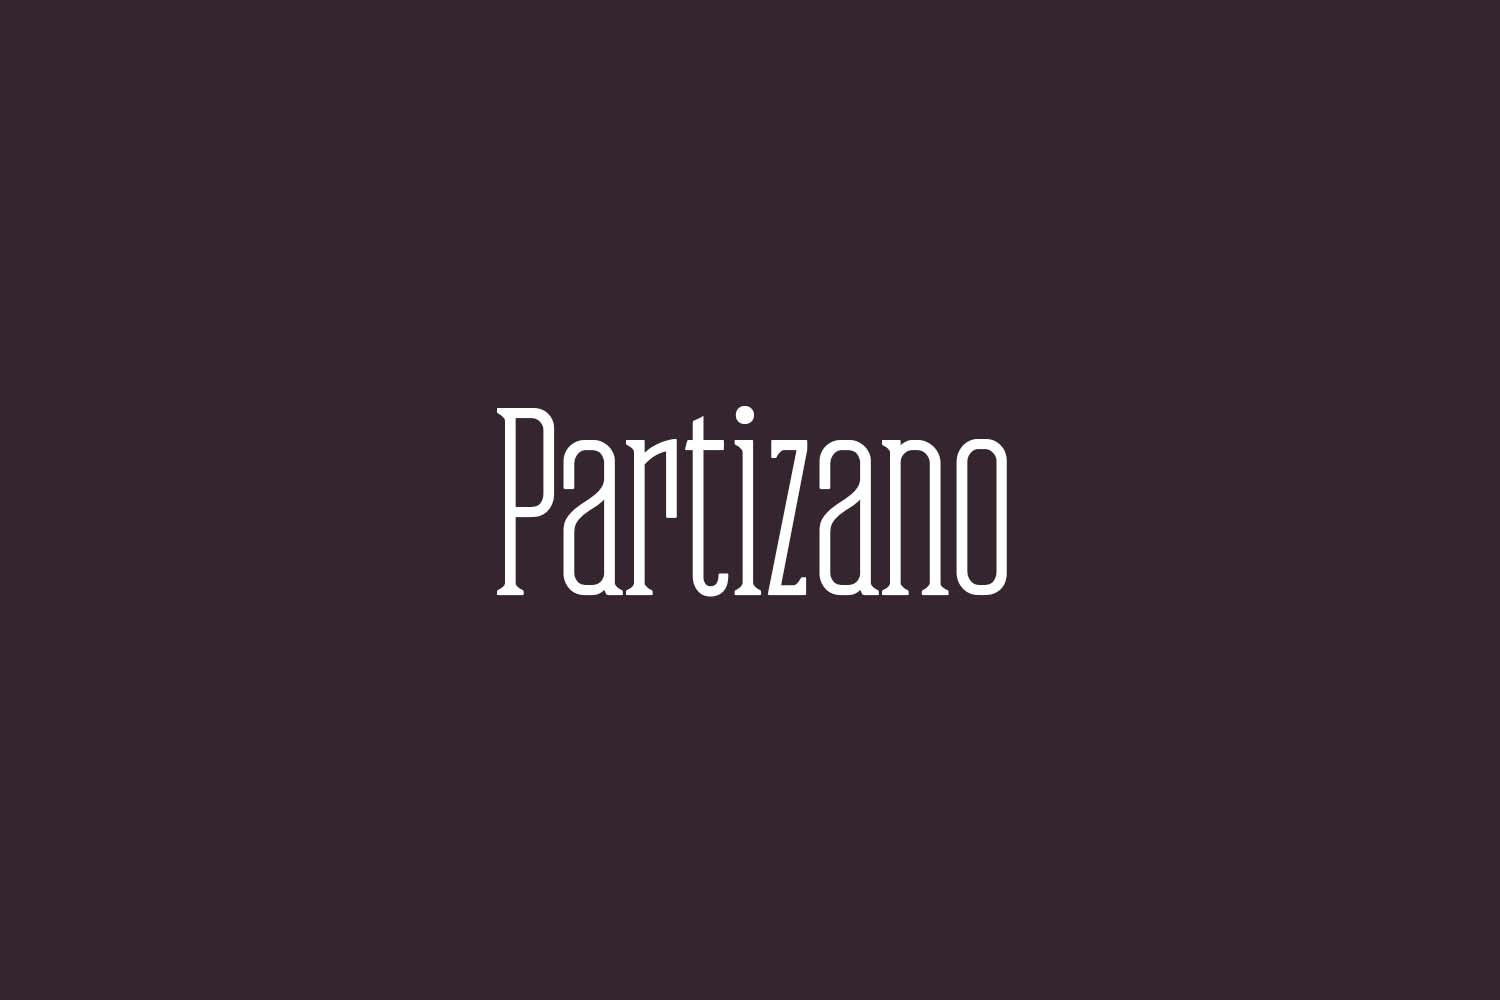 Partizano Free Font